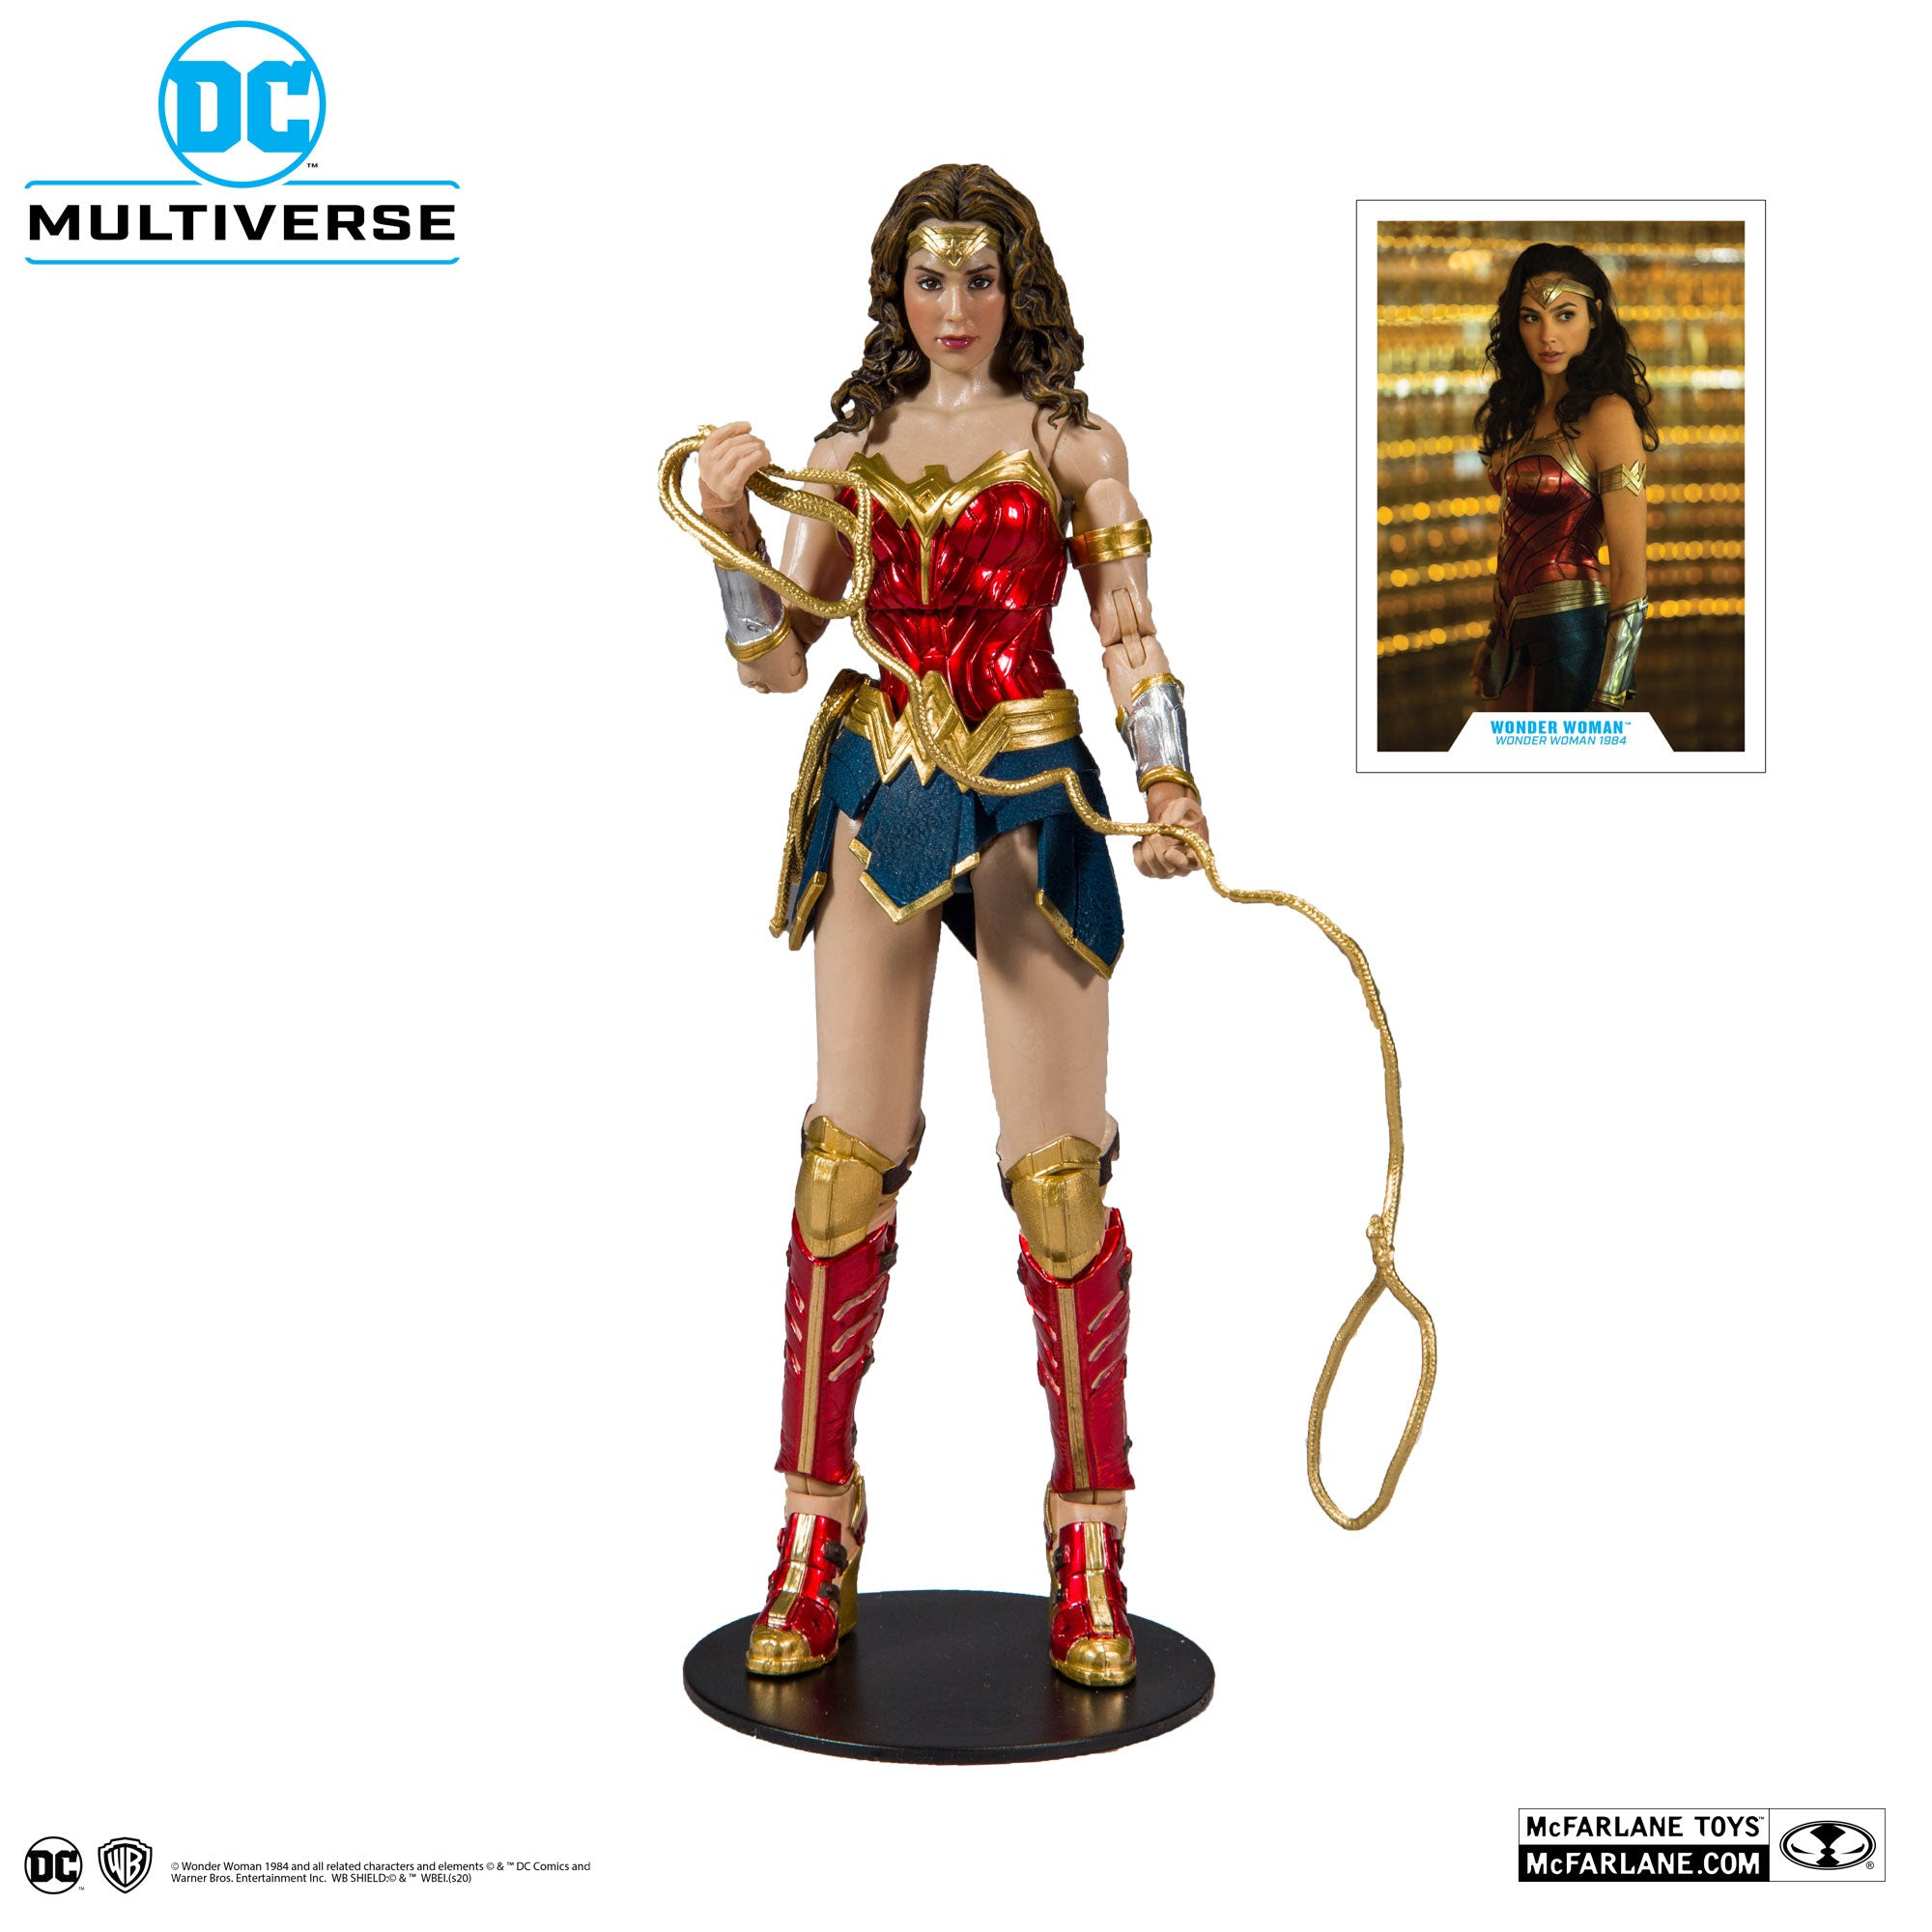 Image of DC Multiverse Wonder Woman 1984 7" Scale Action Figures - Wonder Woman